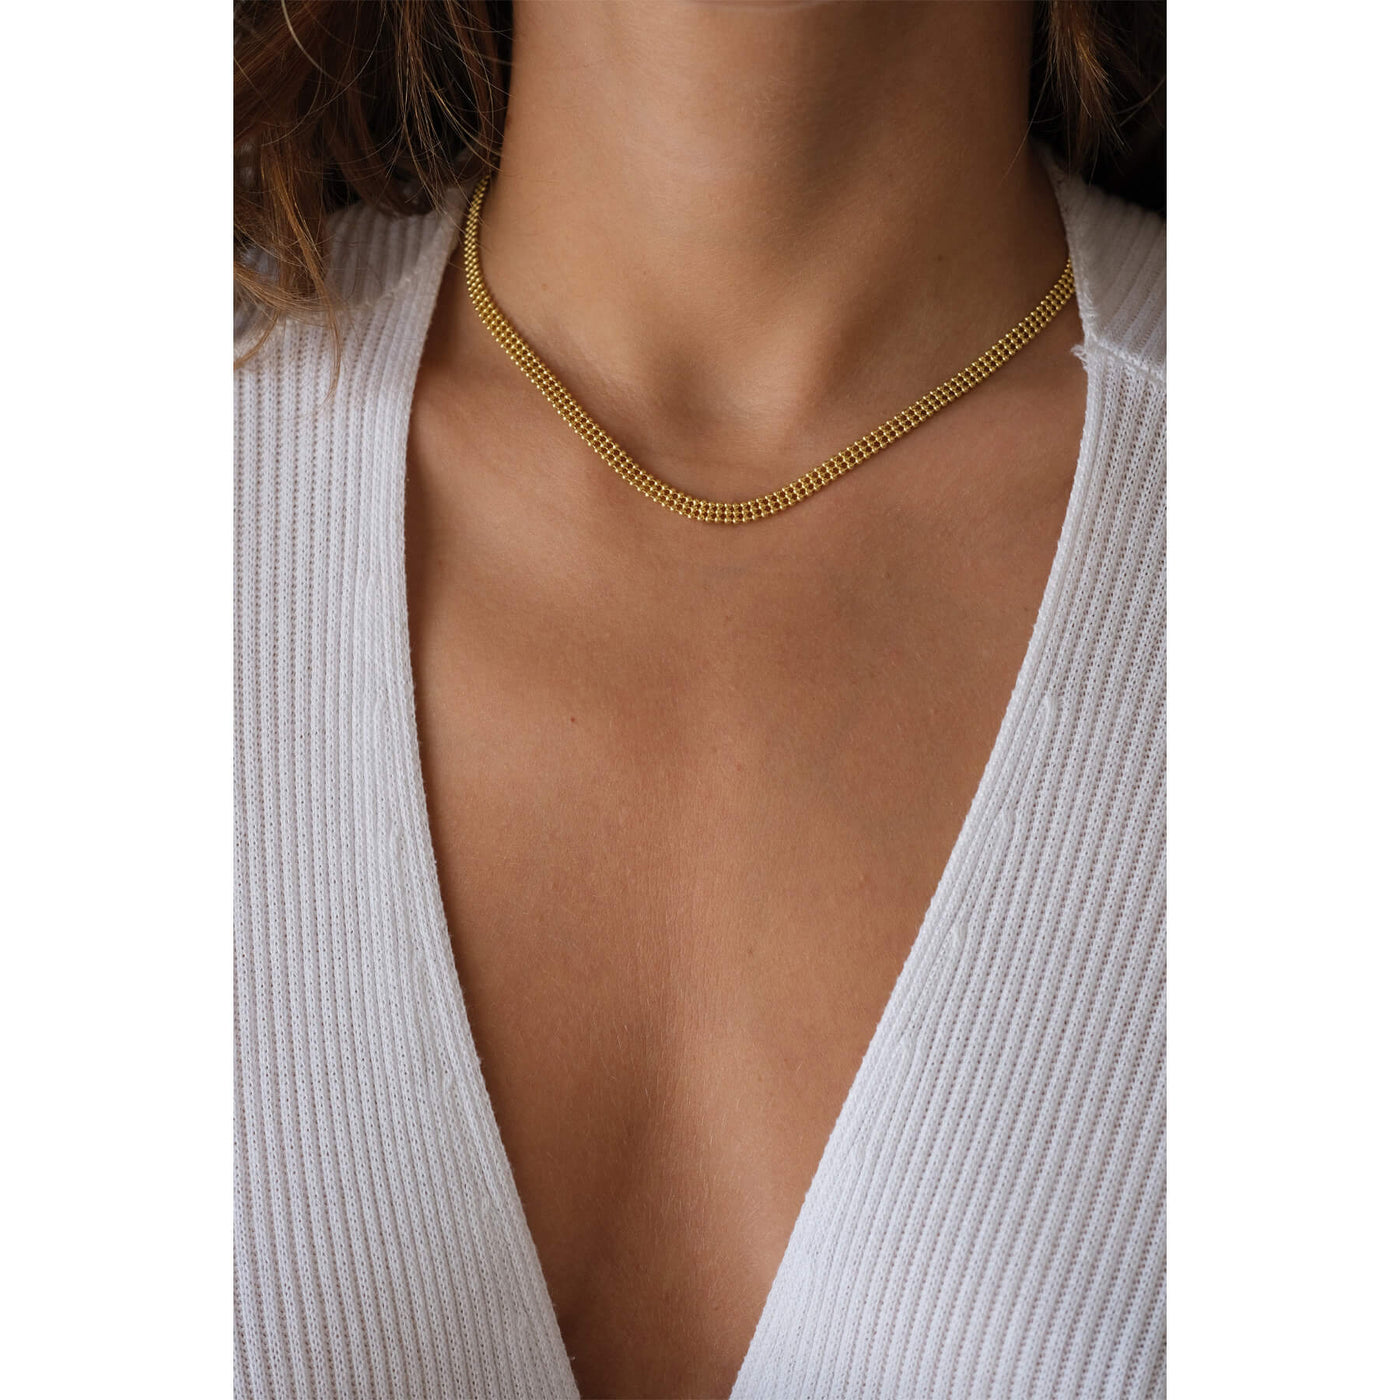 model wearing a lightweight chainlink necklace, handmade in Greece, 18K gold